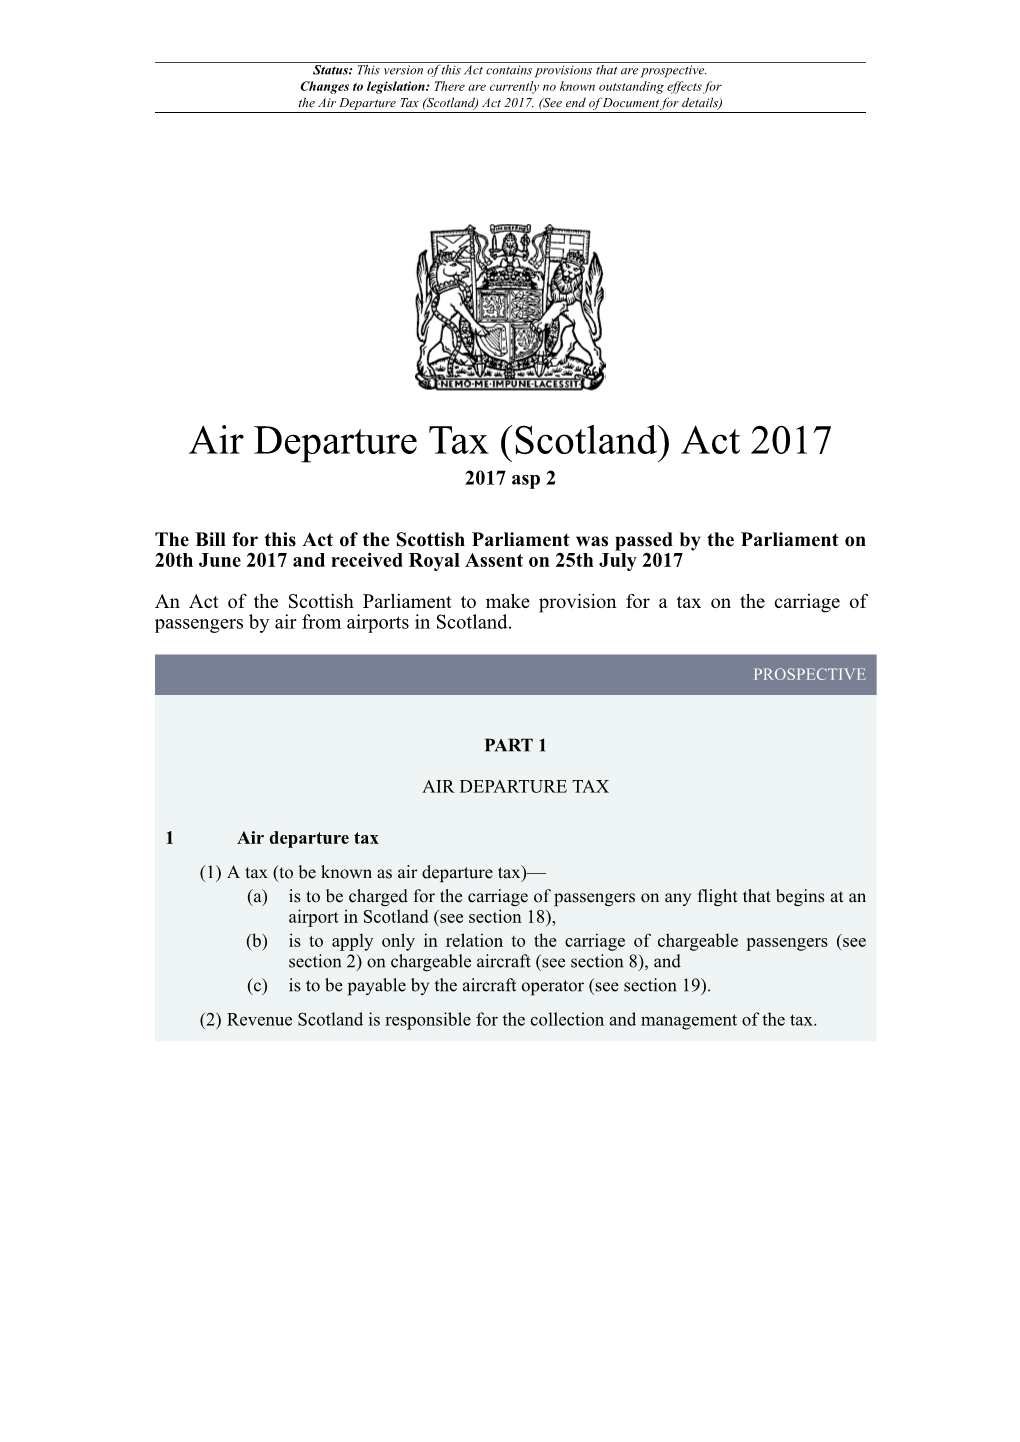 Air Departure Tax (Scotland) Act 2017